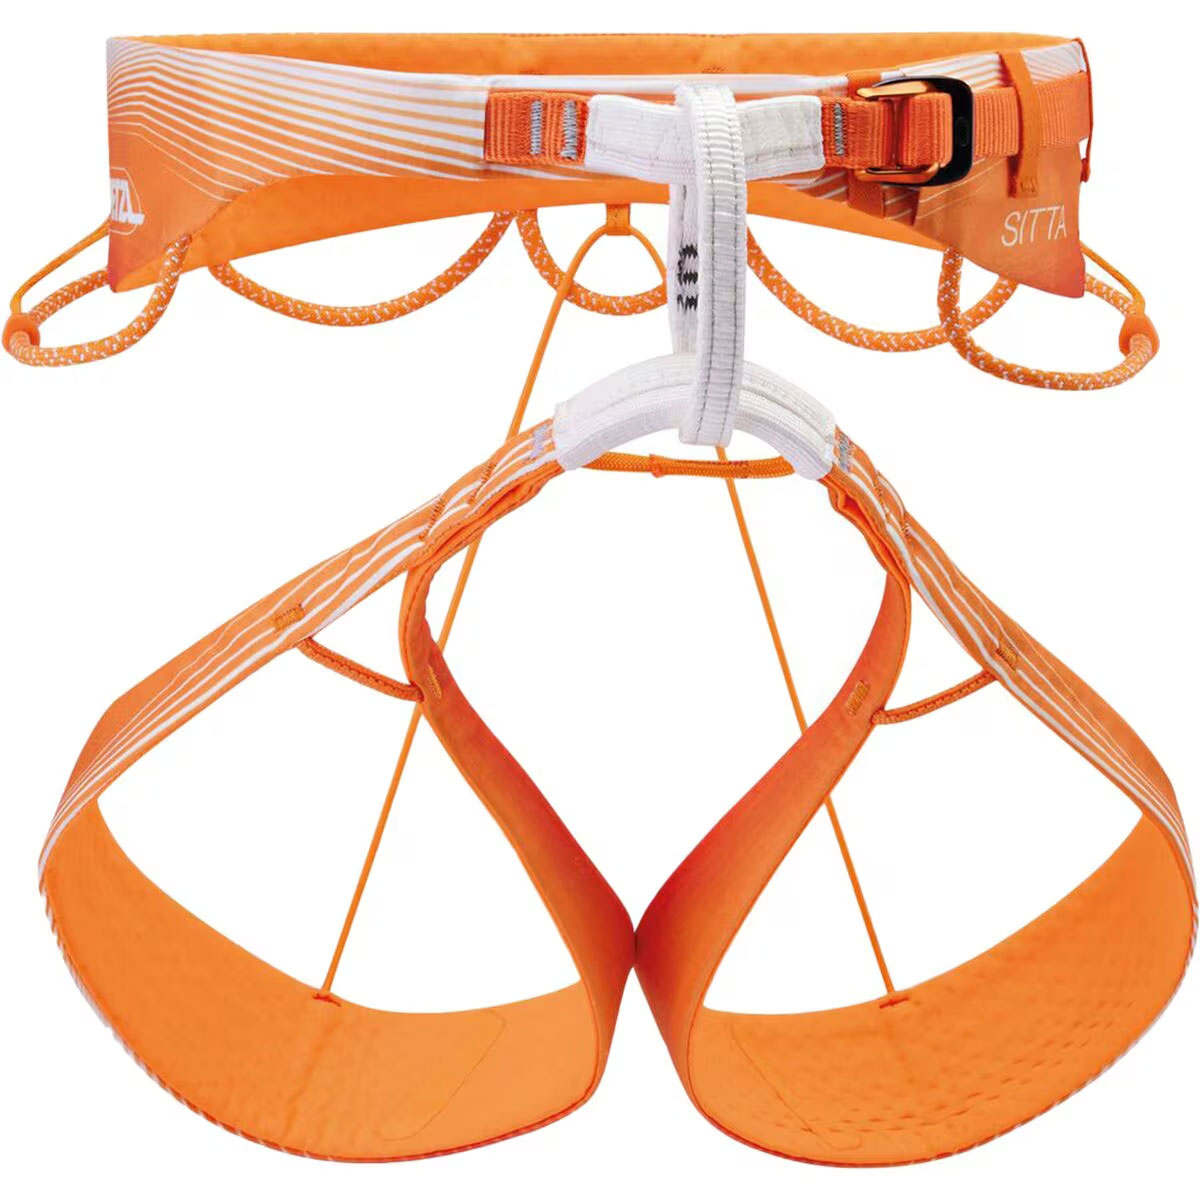 Petzl-Sitta-climbing-harness